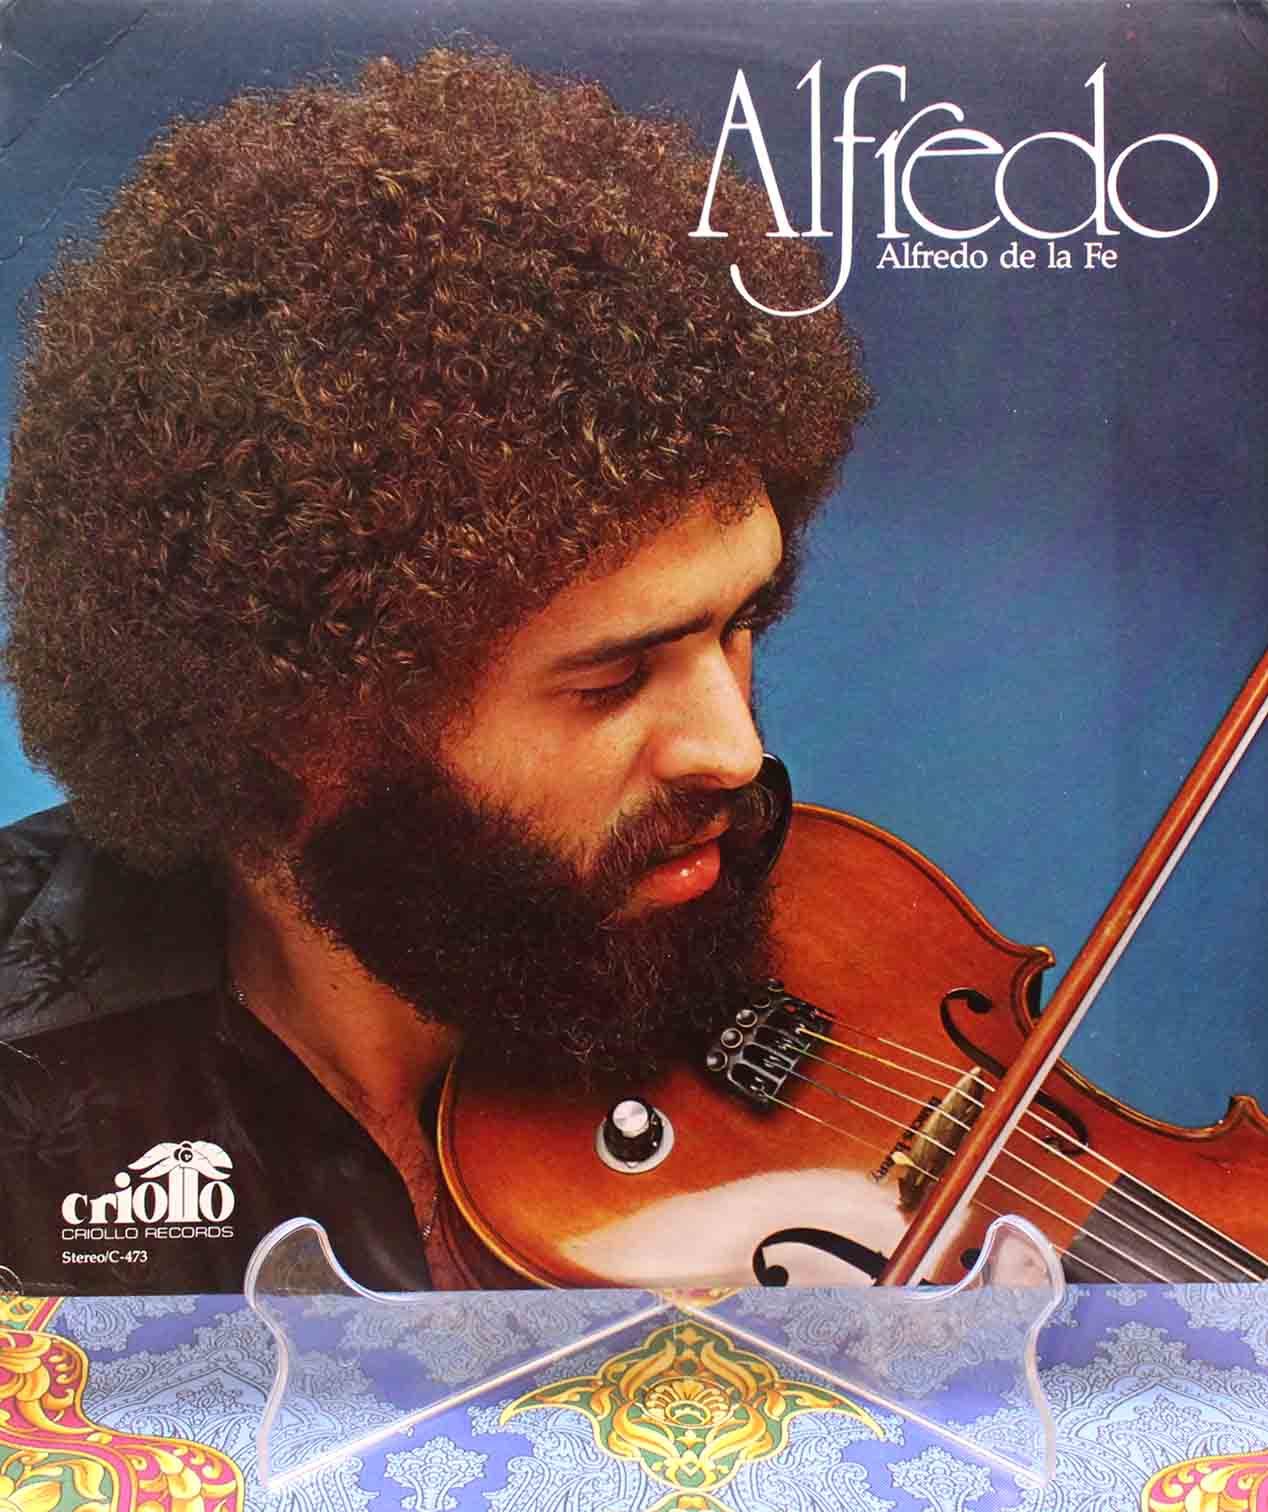 Alfredo de la Fe (1979) - Alfredo 01